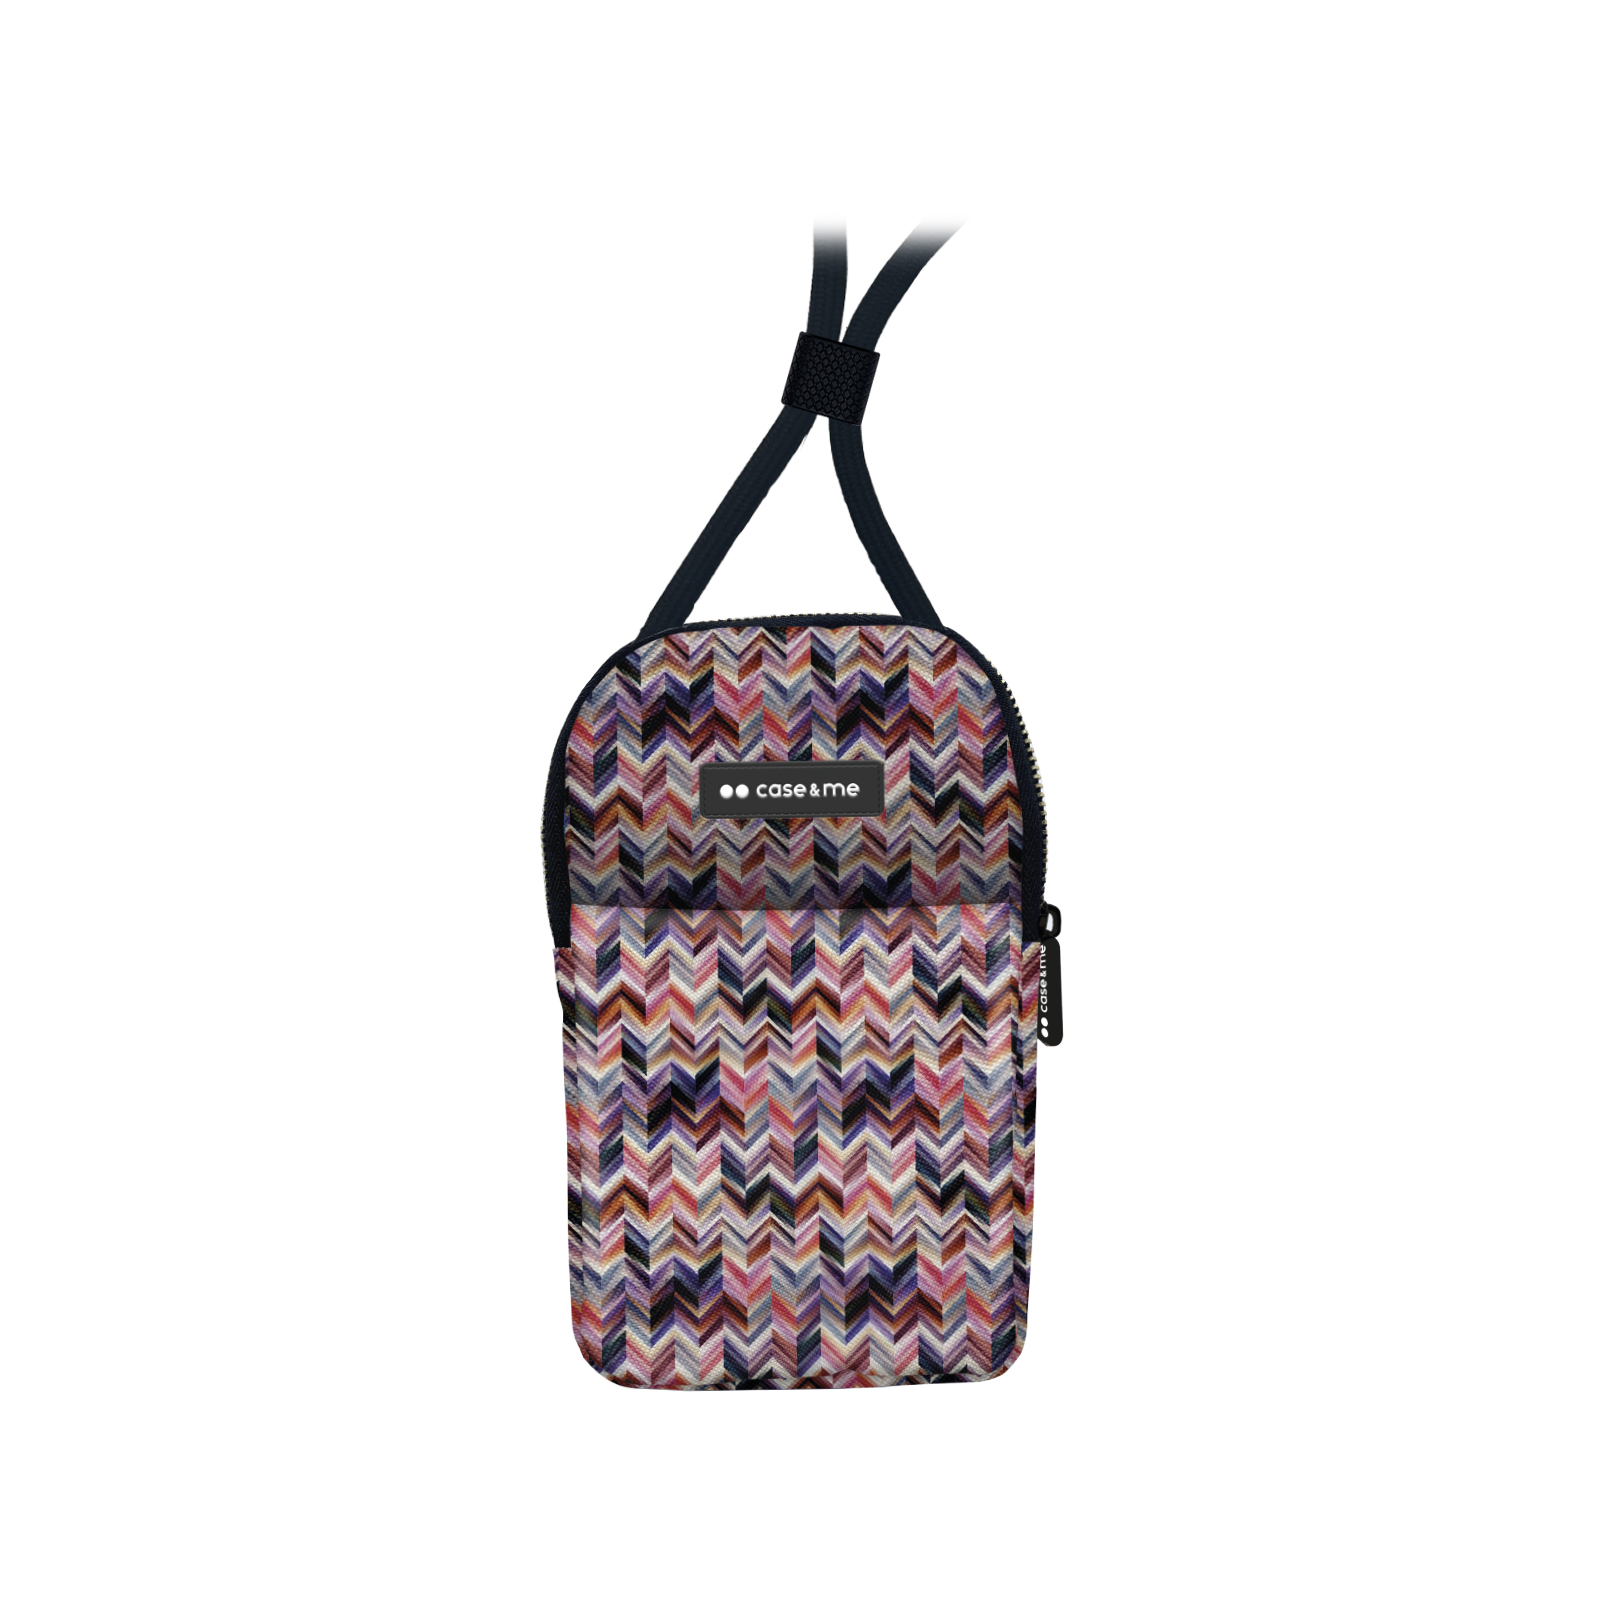 c&m - Taštička Fancy Bag, M pattern